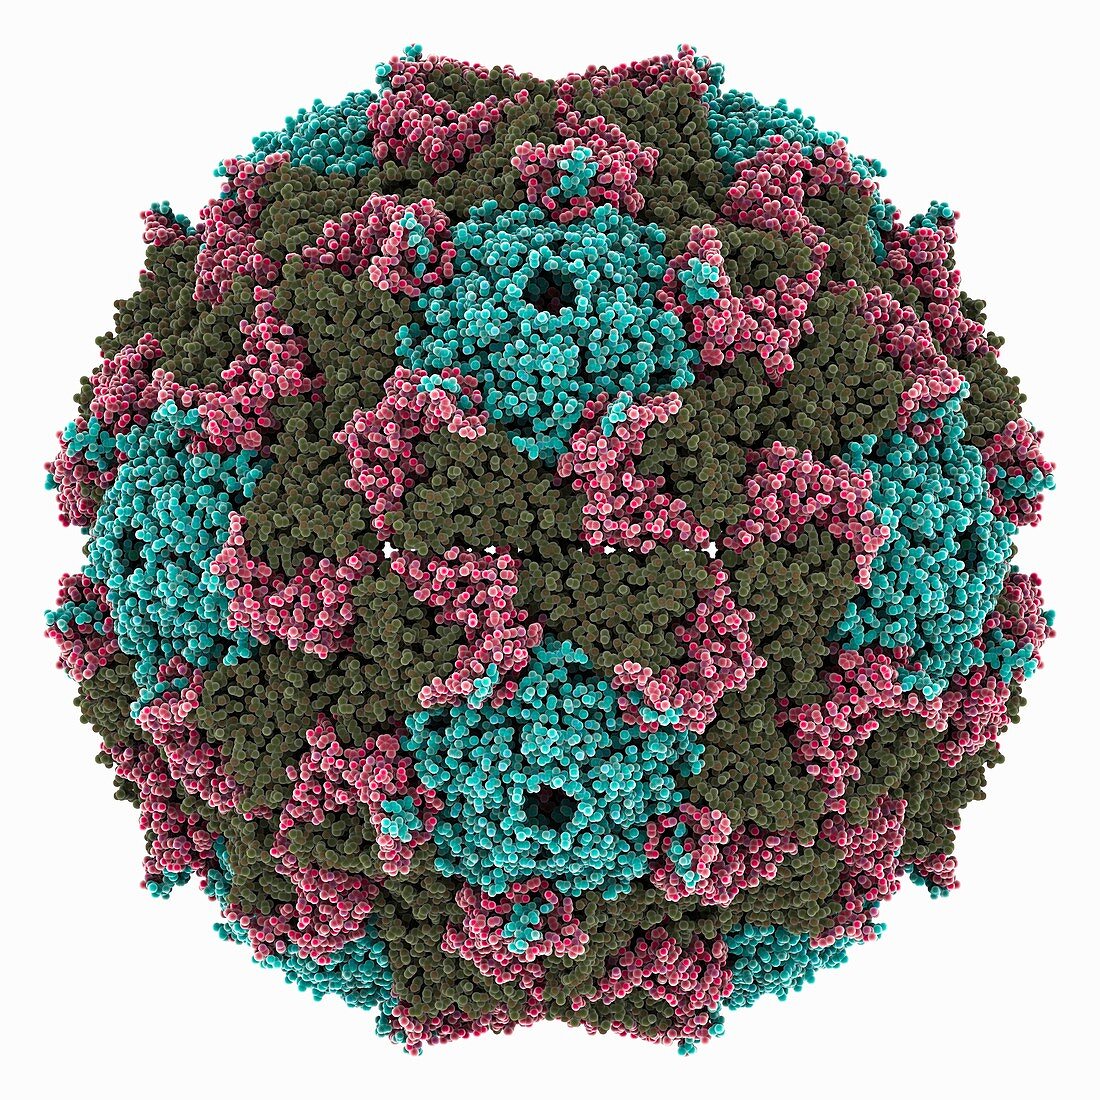 Kashmir bee virus capsid, molecular model